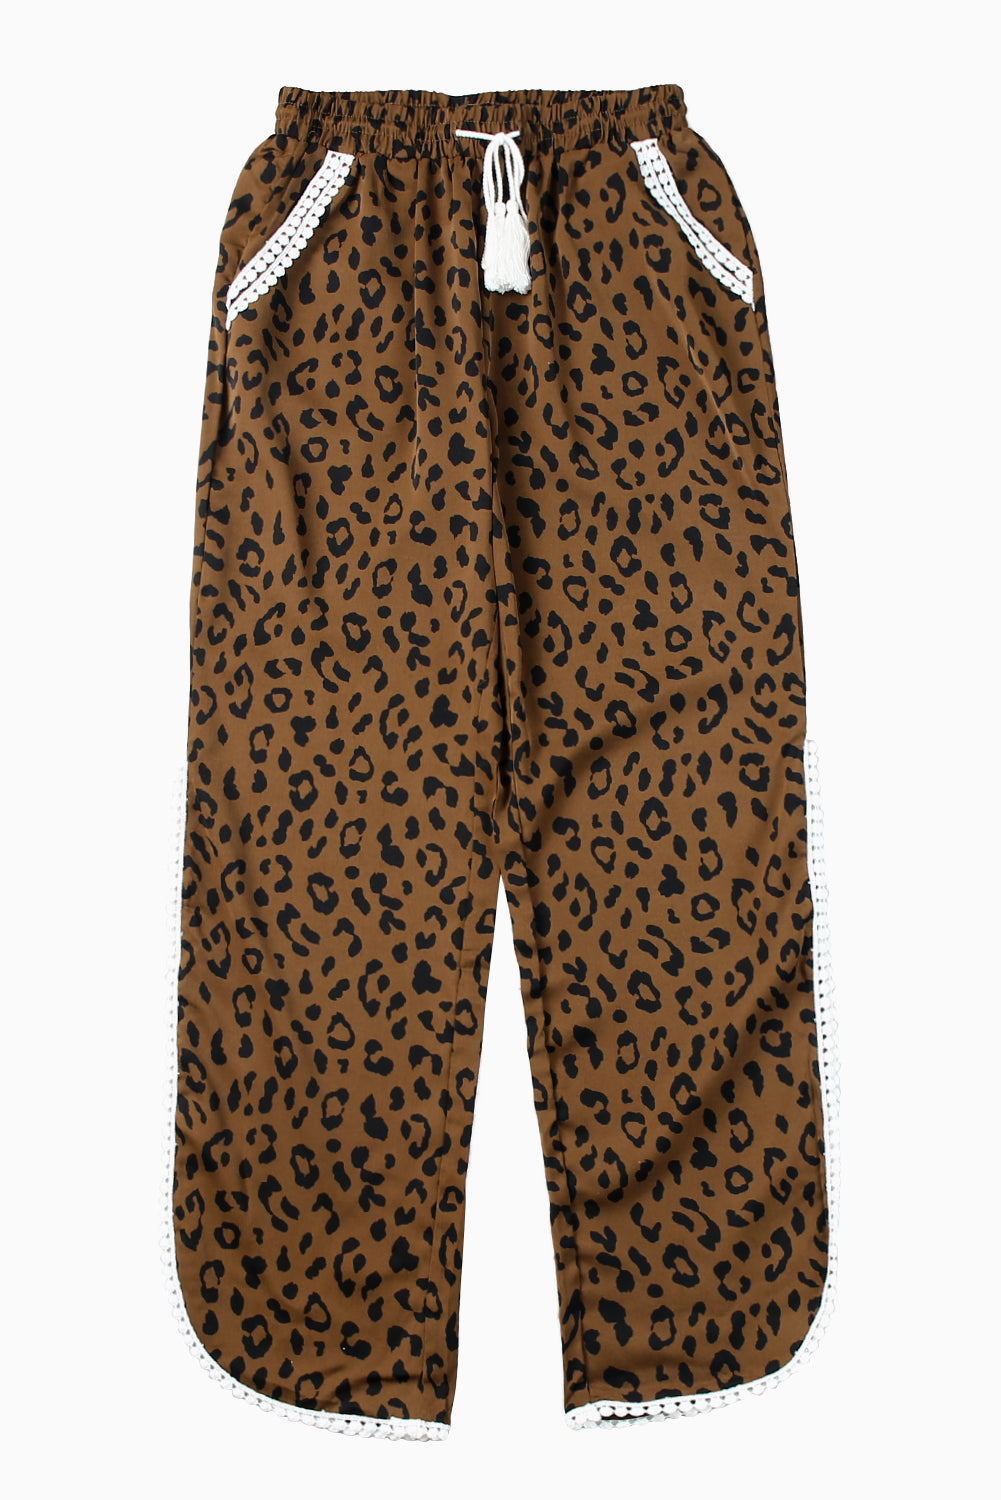 Brown Leopard Print Casual Pants, Pants